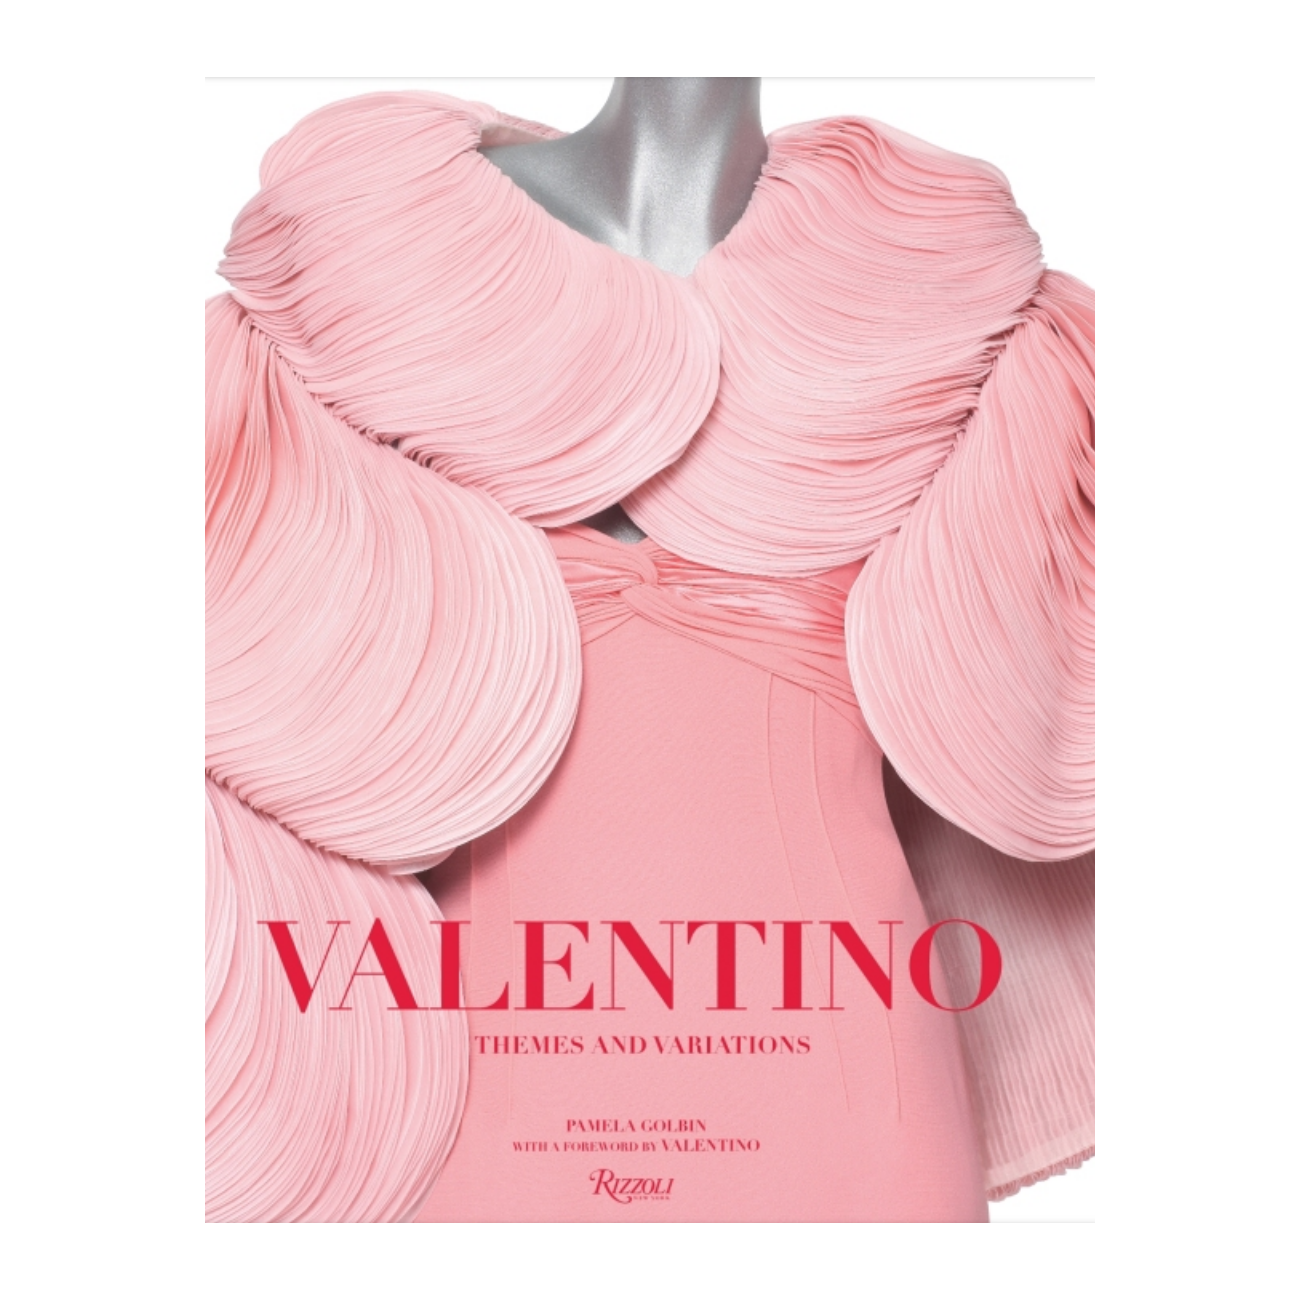 Valentino. Themes & Variations